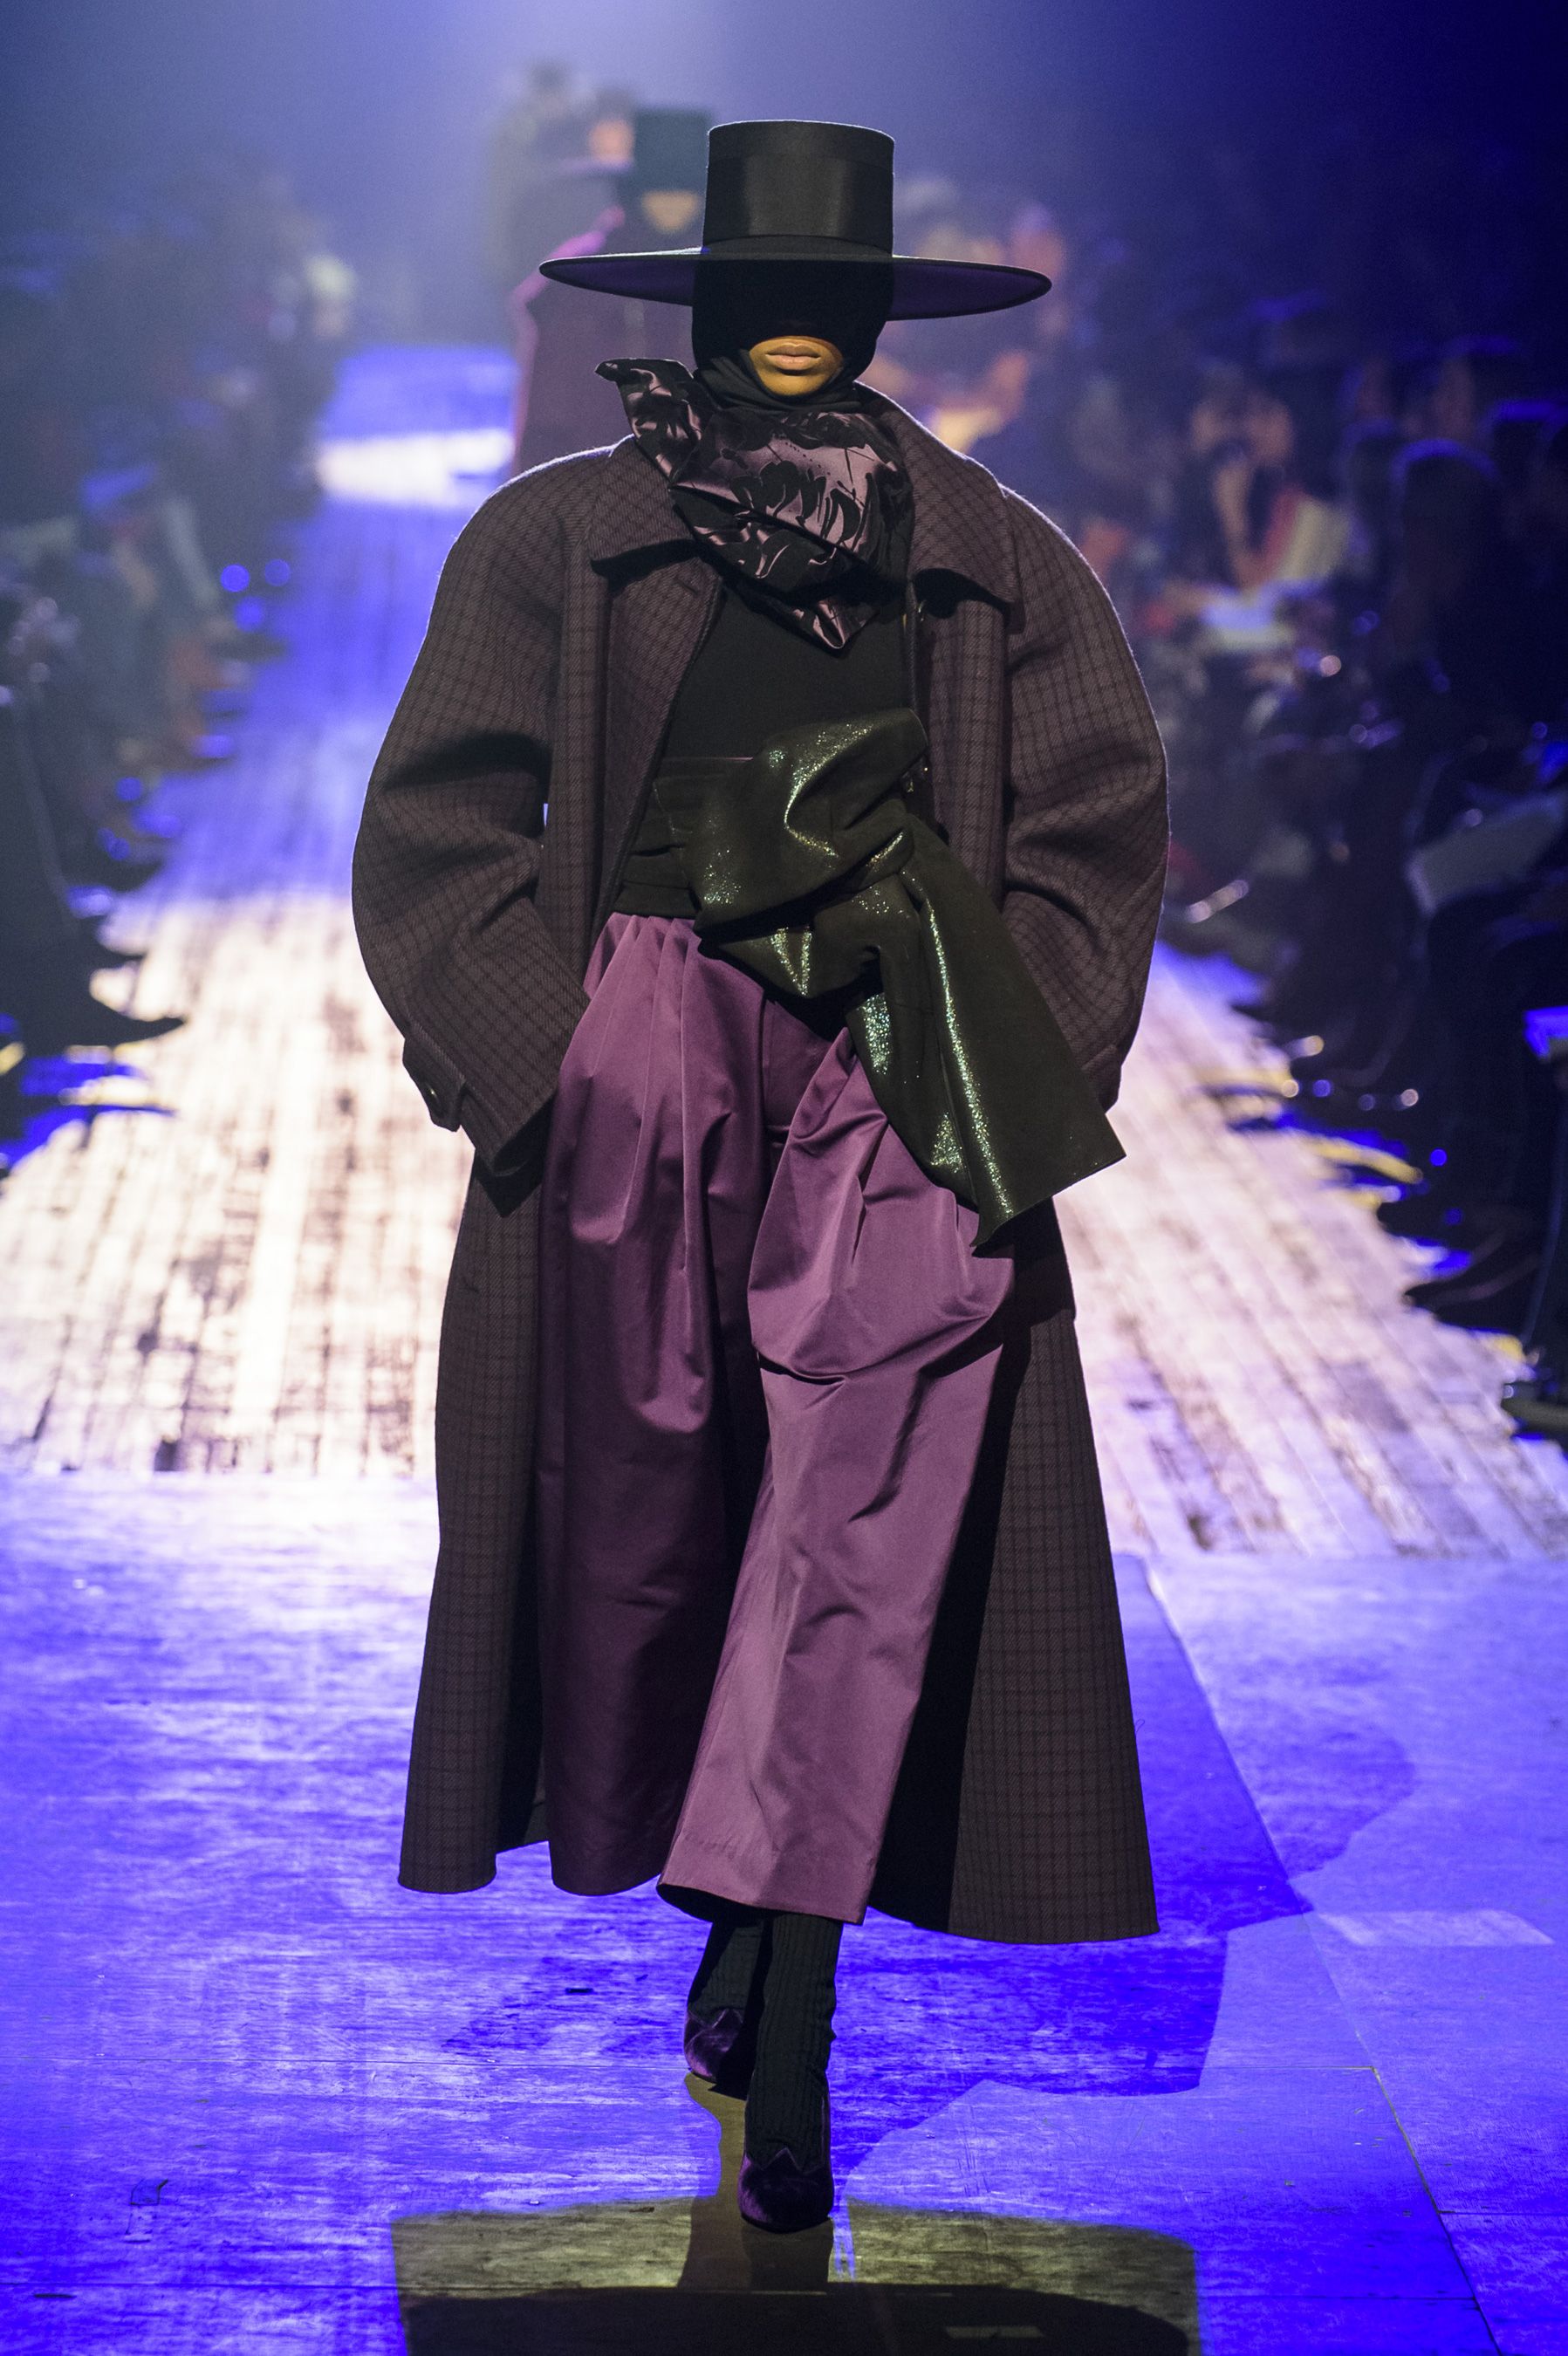 Marc Jacobs Fall 2009: Neon Coats, Power Suits and Glitztastic